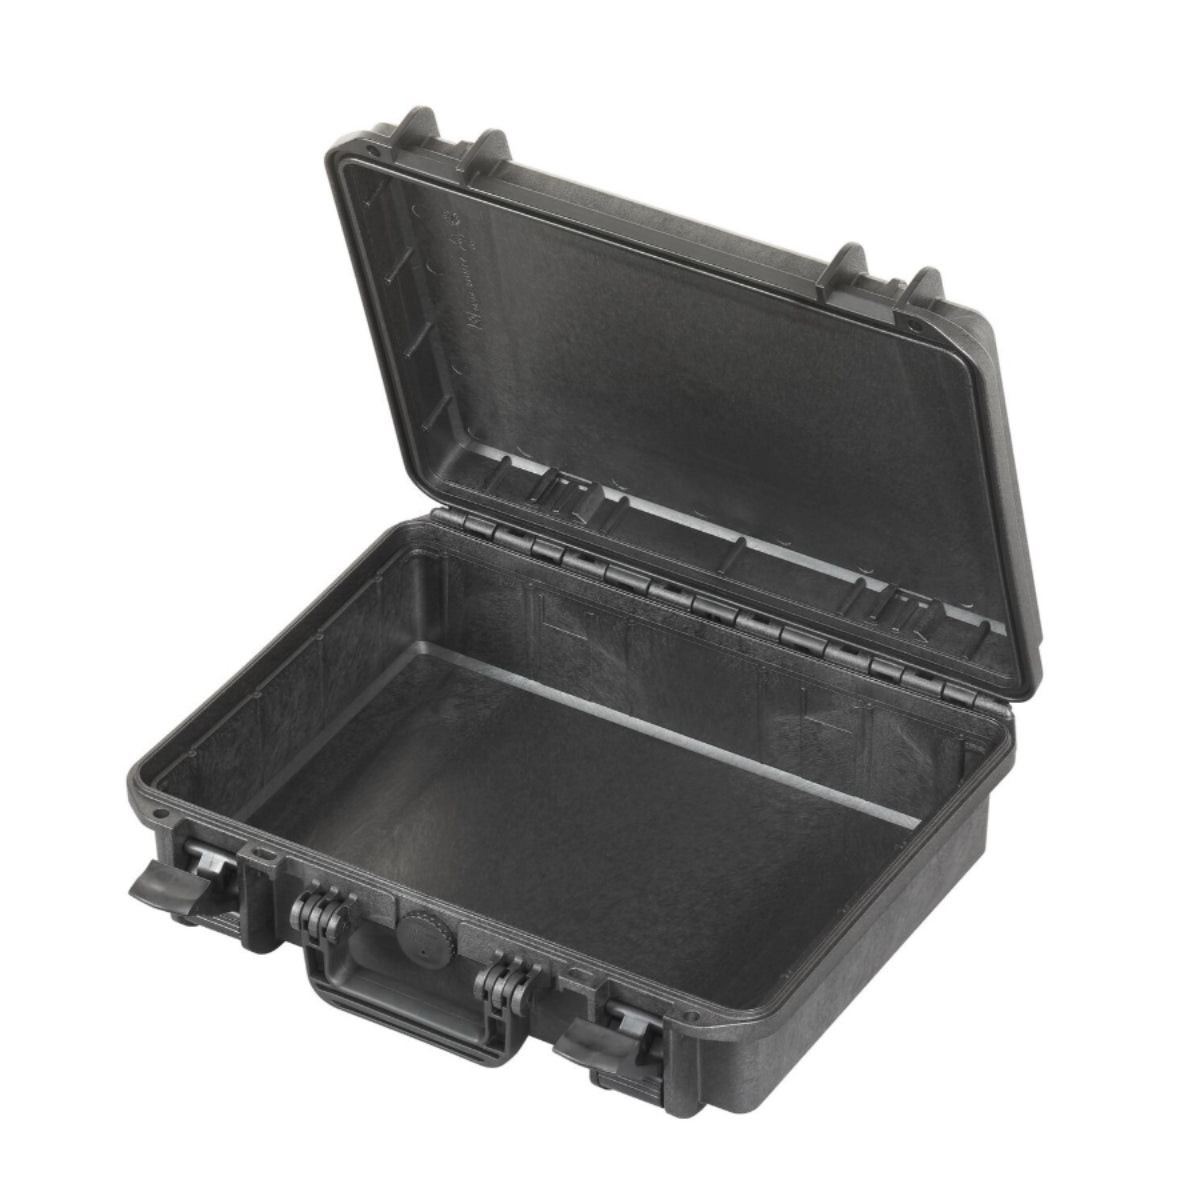 SP PRO 380H115 Black Carry Case, Empty w/ Convoluted Foam in Lid, ID: L380xW270xH115mm